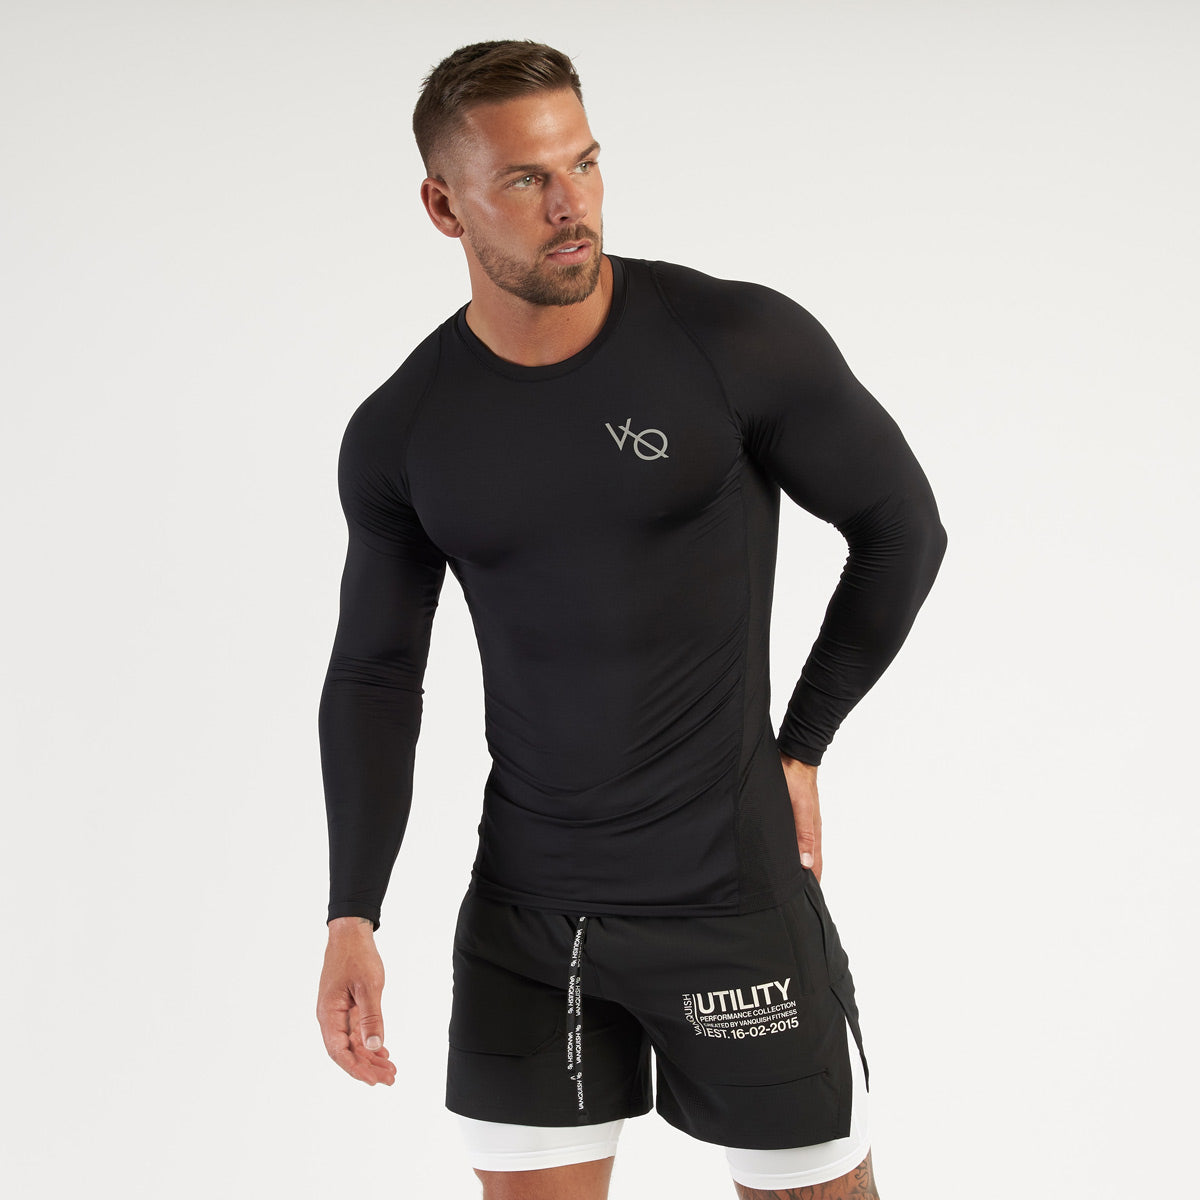 Vanquish Utility Men's Black Long Sleeved Compression T Shirt